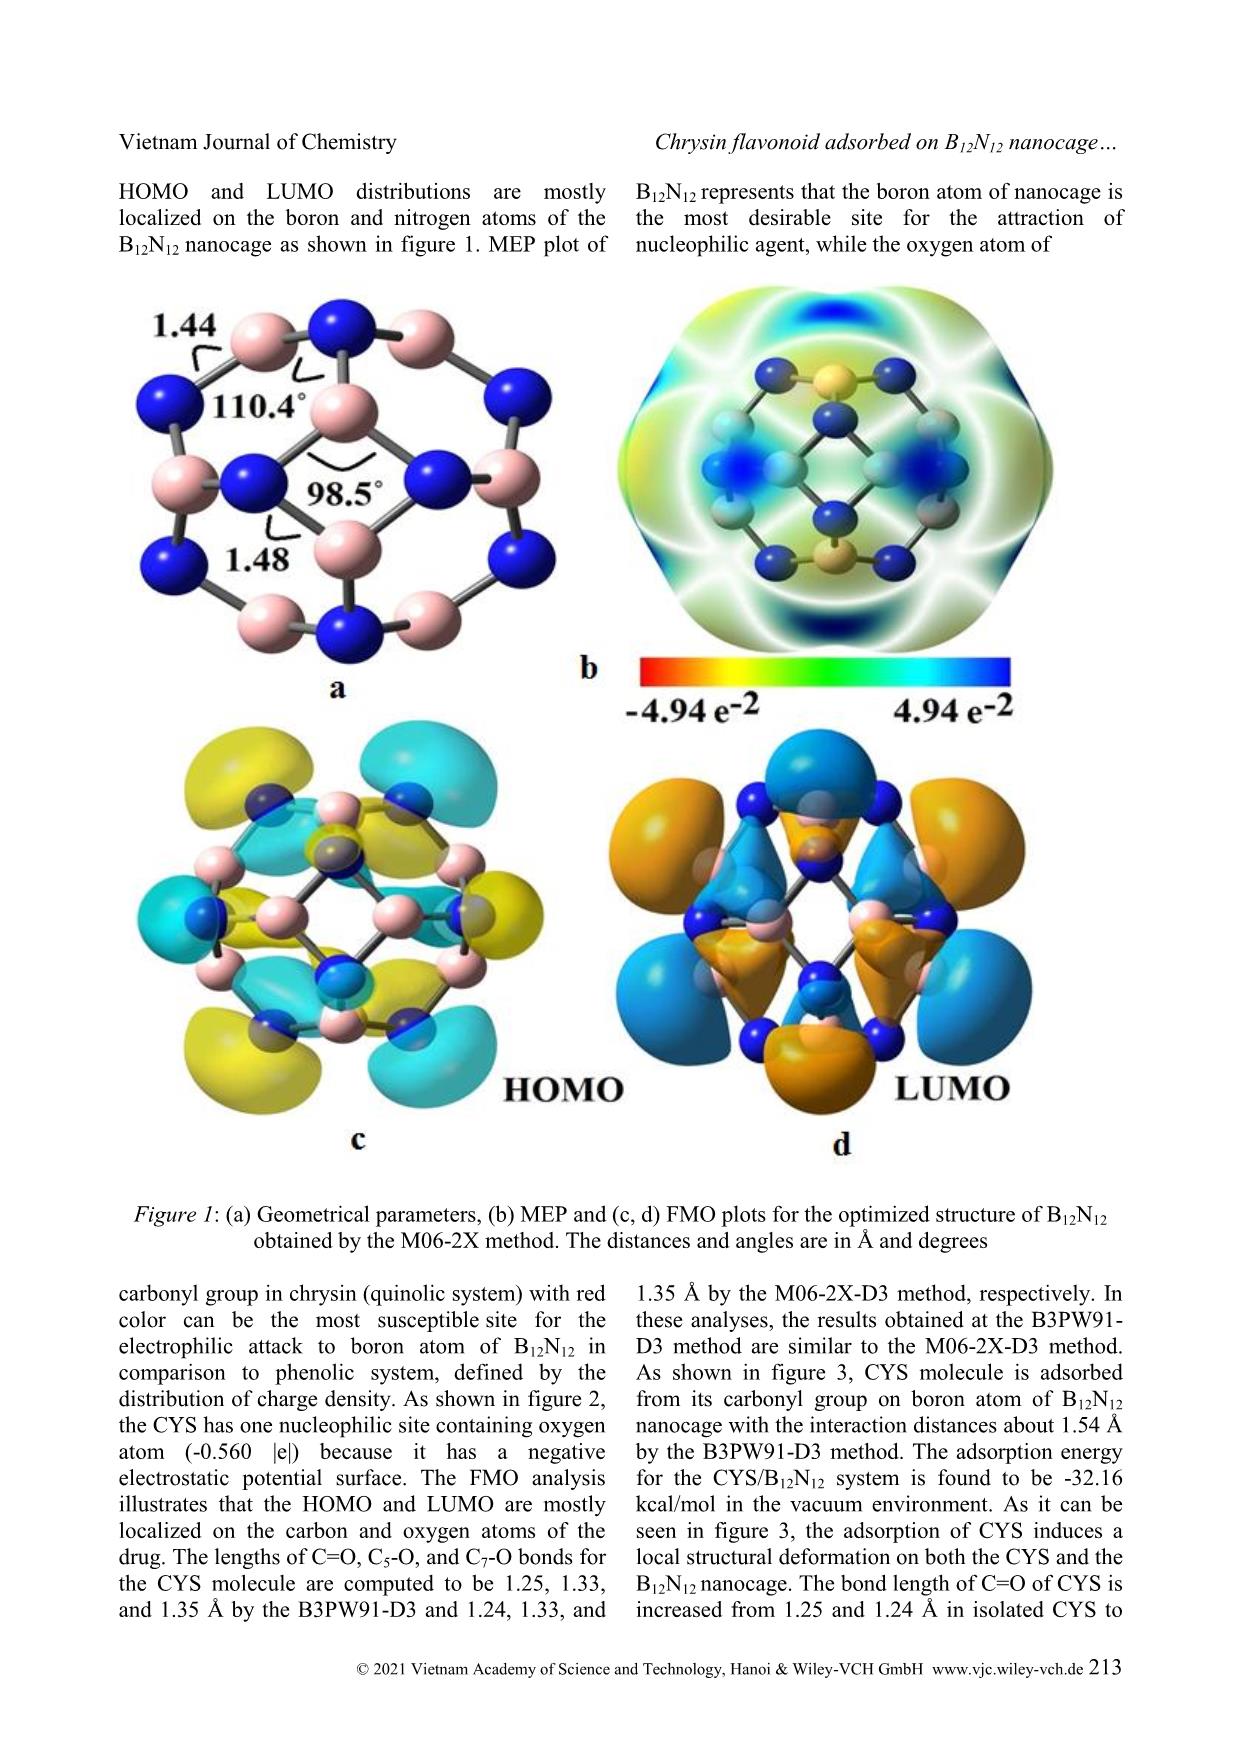 Chrysin flavonoid adsorbed on B12N12 nanocage - A novel antioxidant nanomaterial trang 3